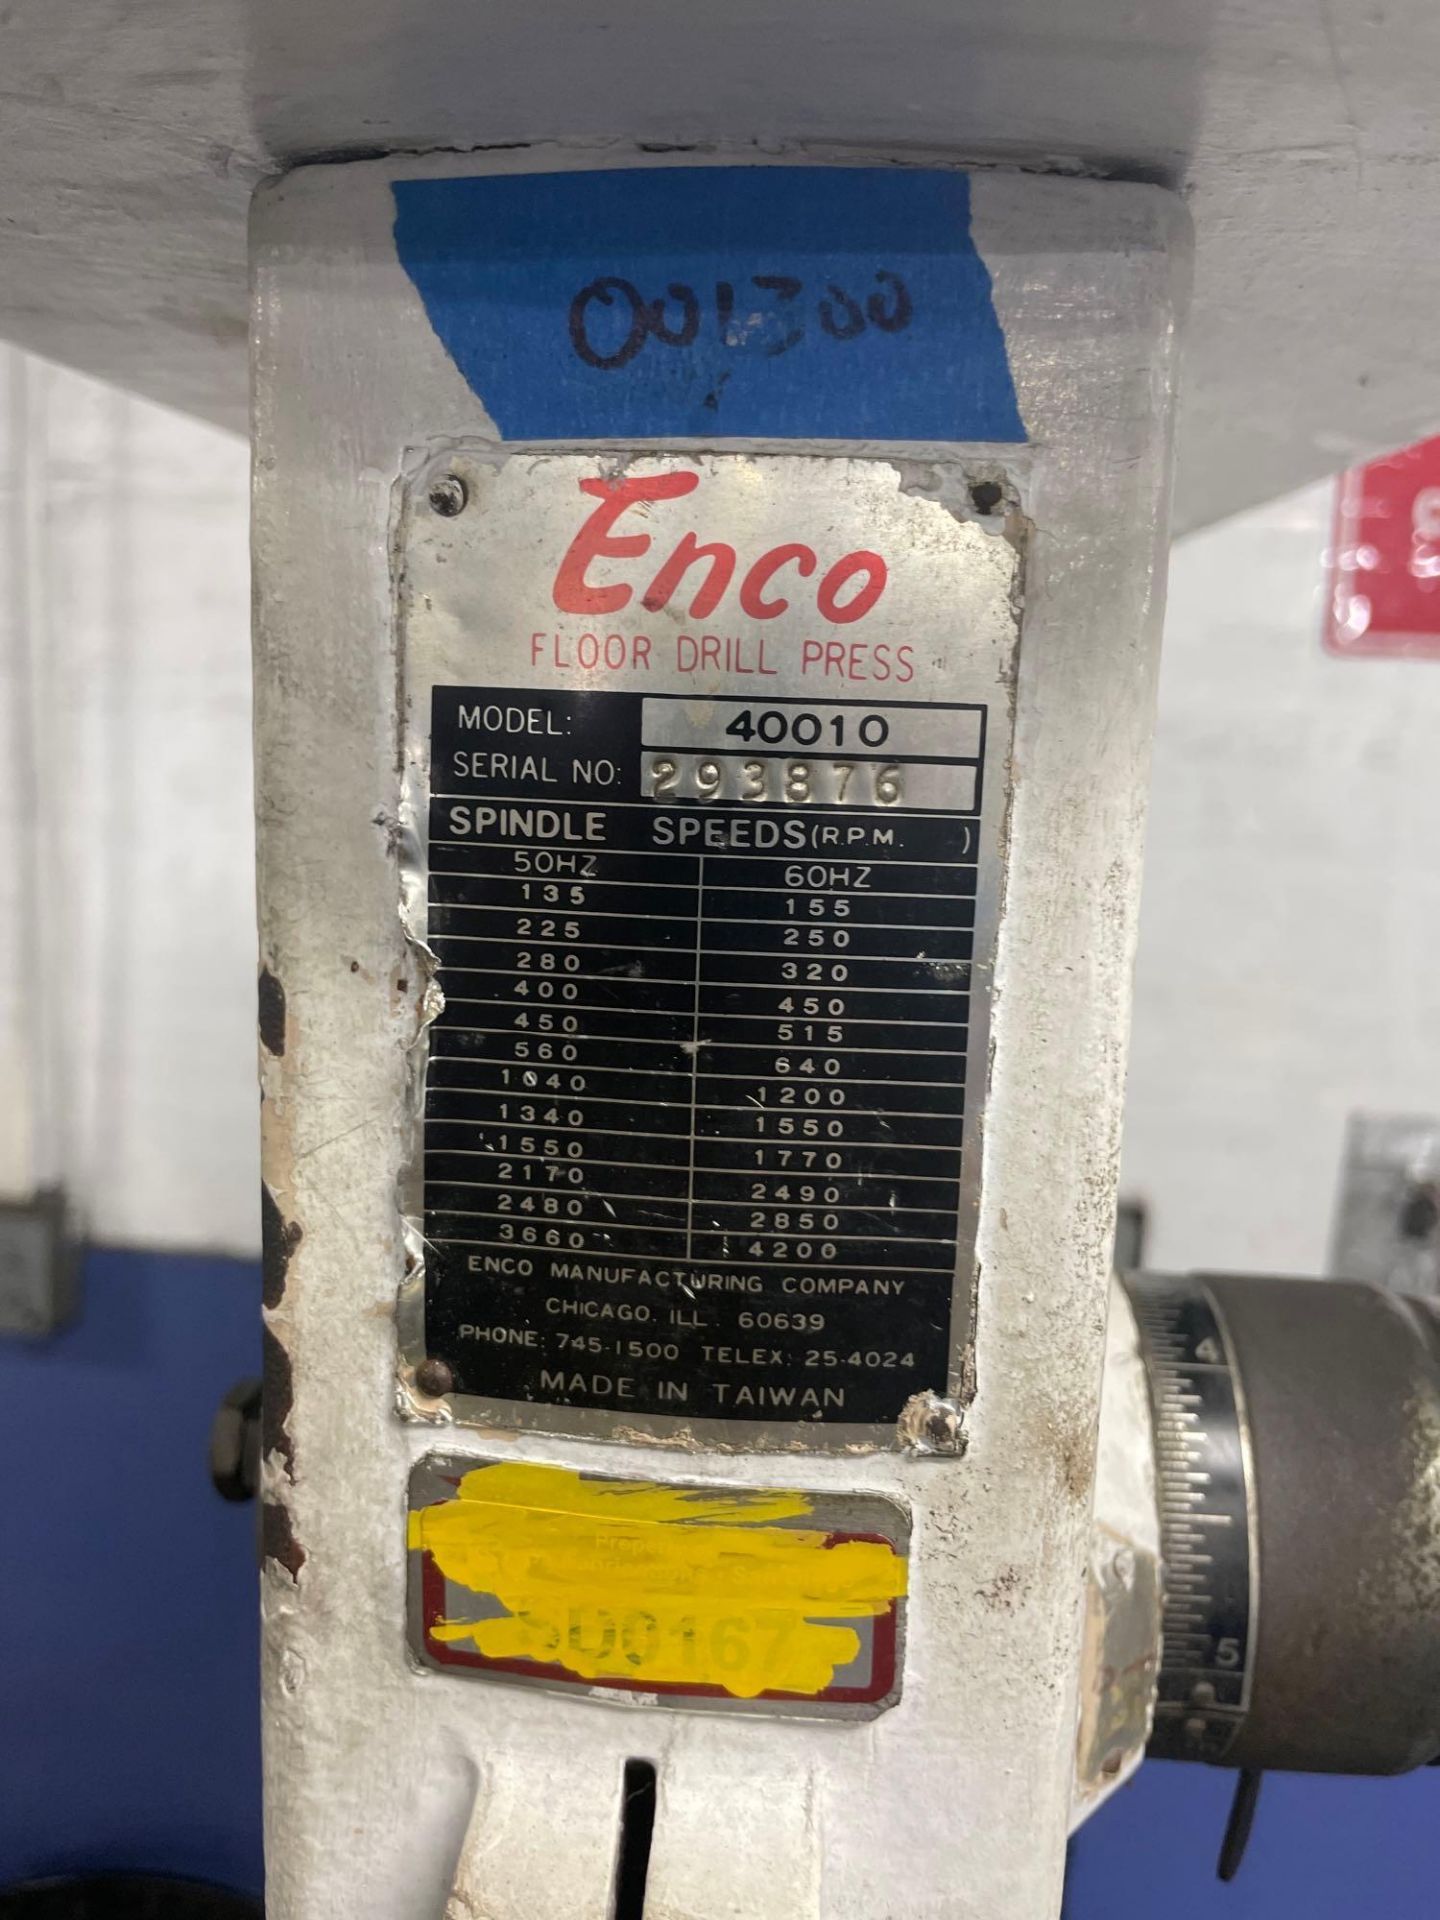 Enco 40010 Floor Drill Press, s/n 293876 - Image 5 of 5